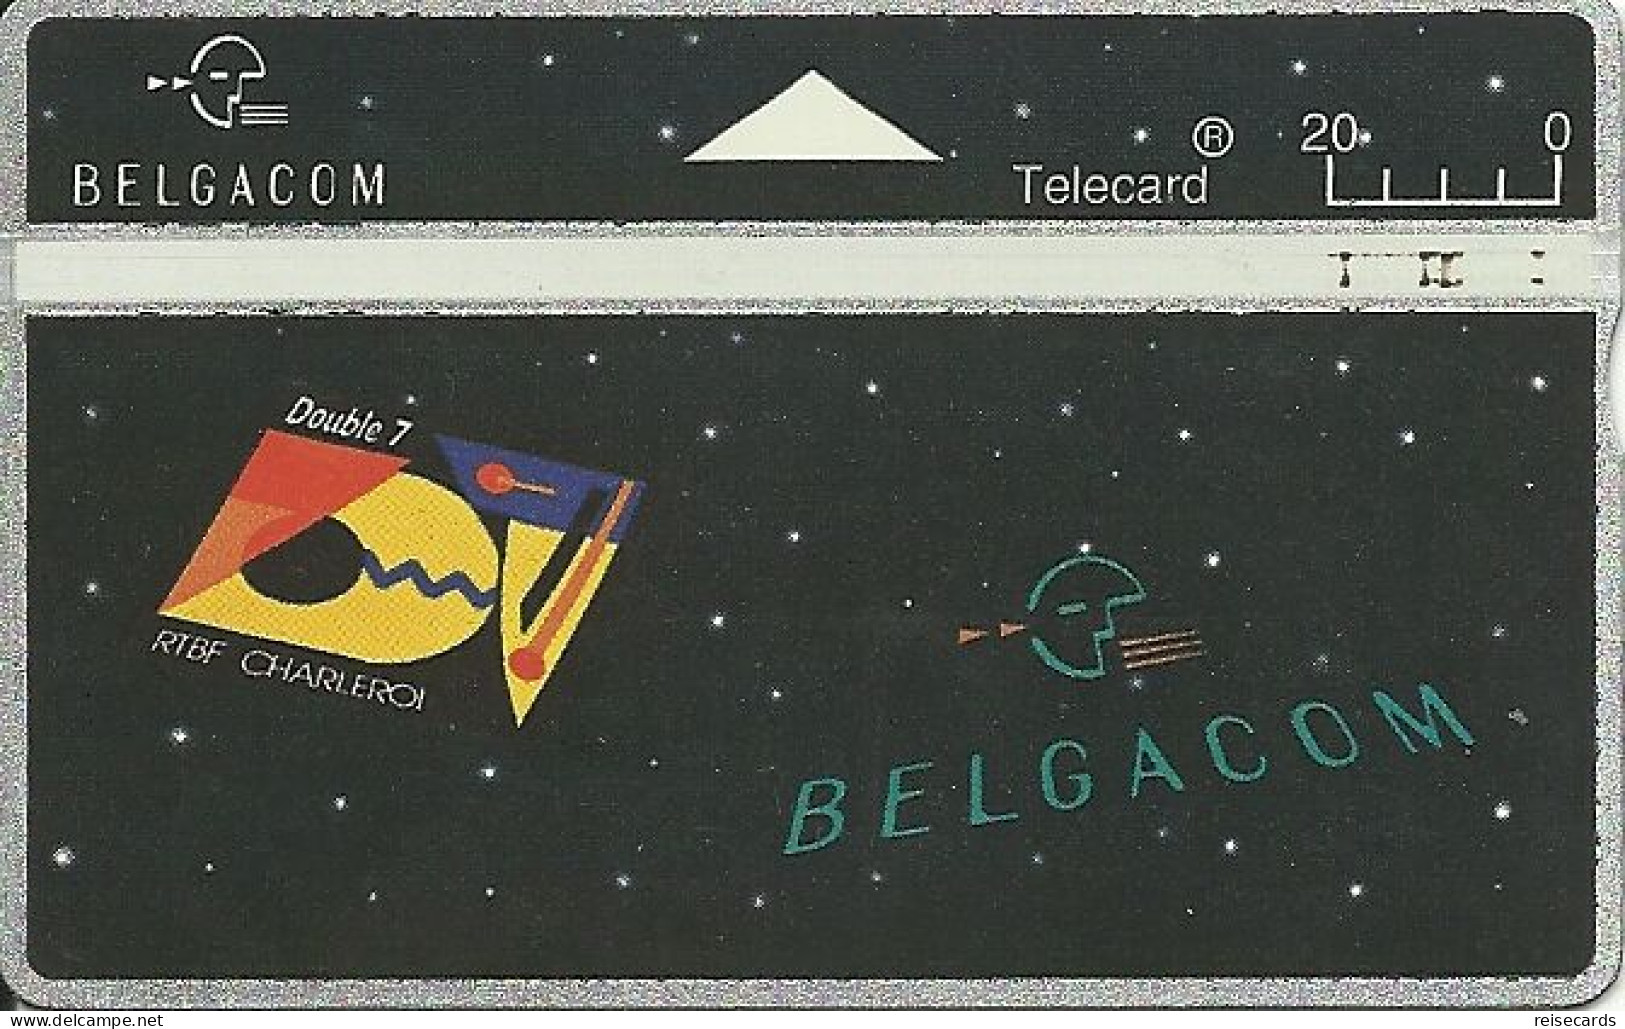 Belgium: Belgacom: 312A Double 7, RTBF Charleroi - Senza Chip